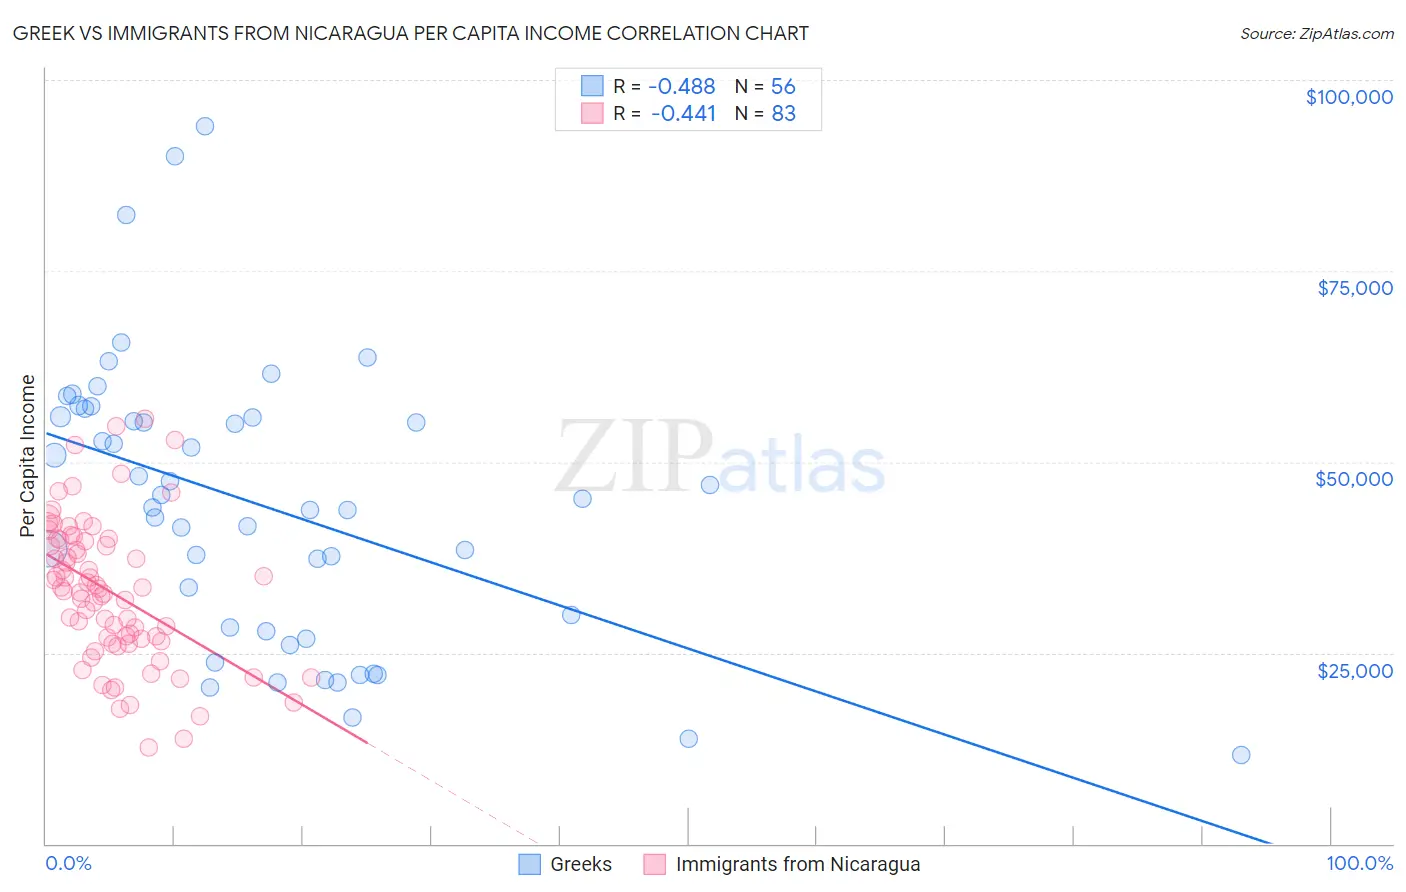 Greek vs Immigrants from Nicaragua Per Capita Income